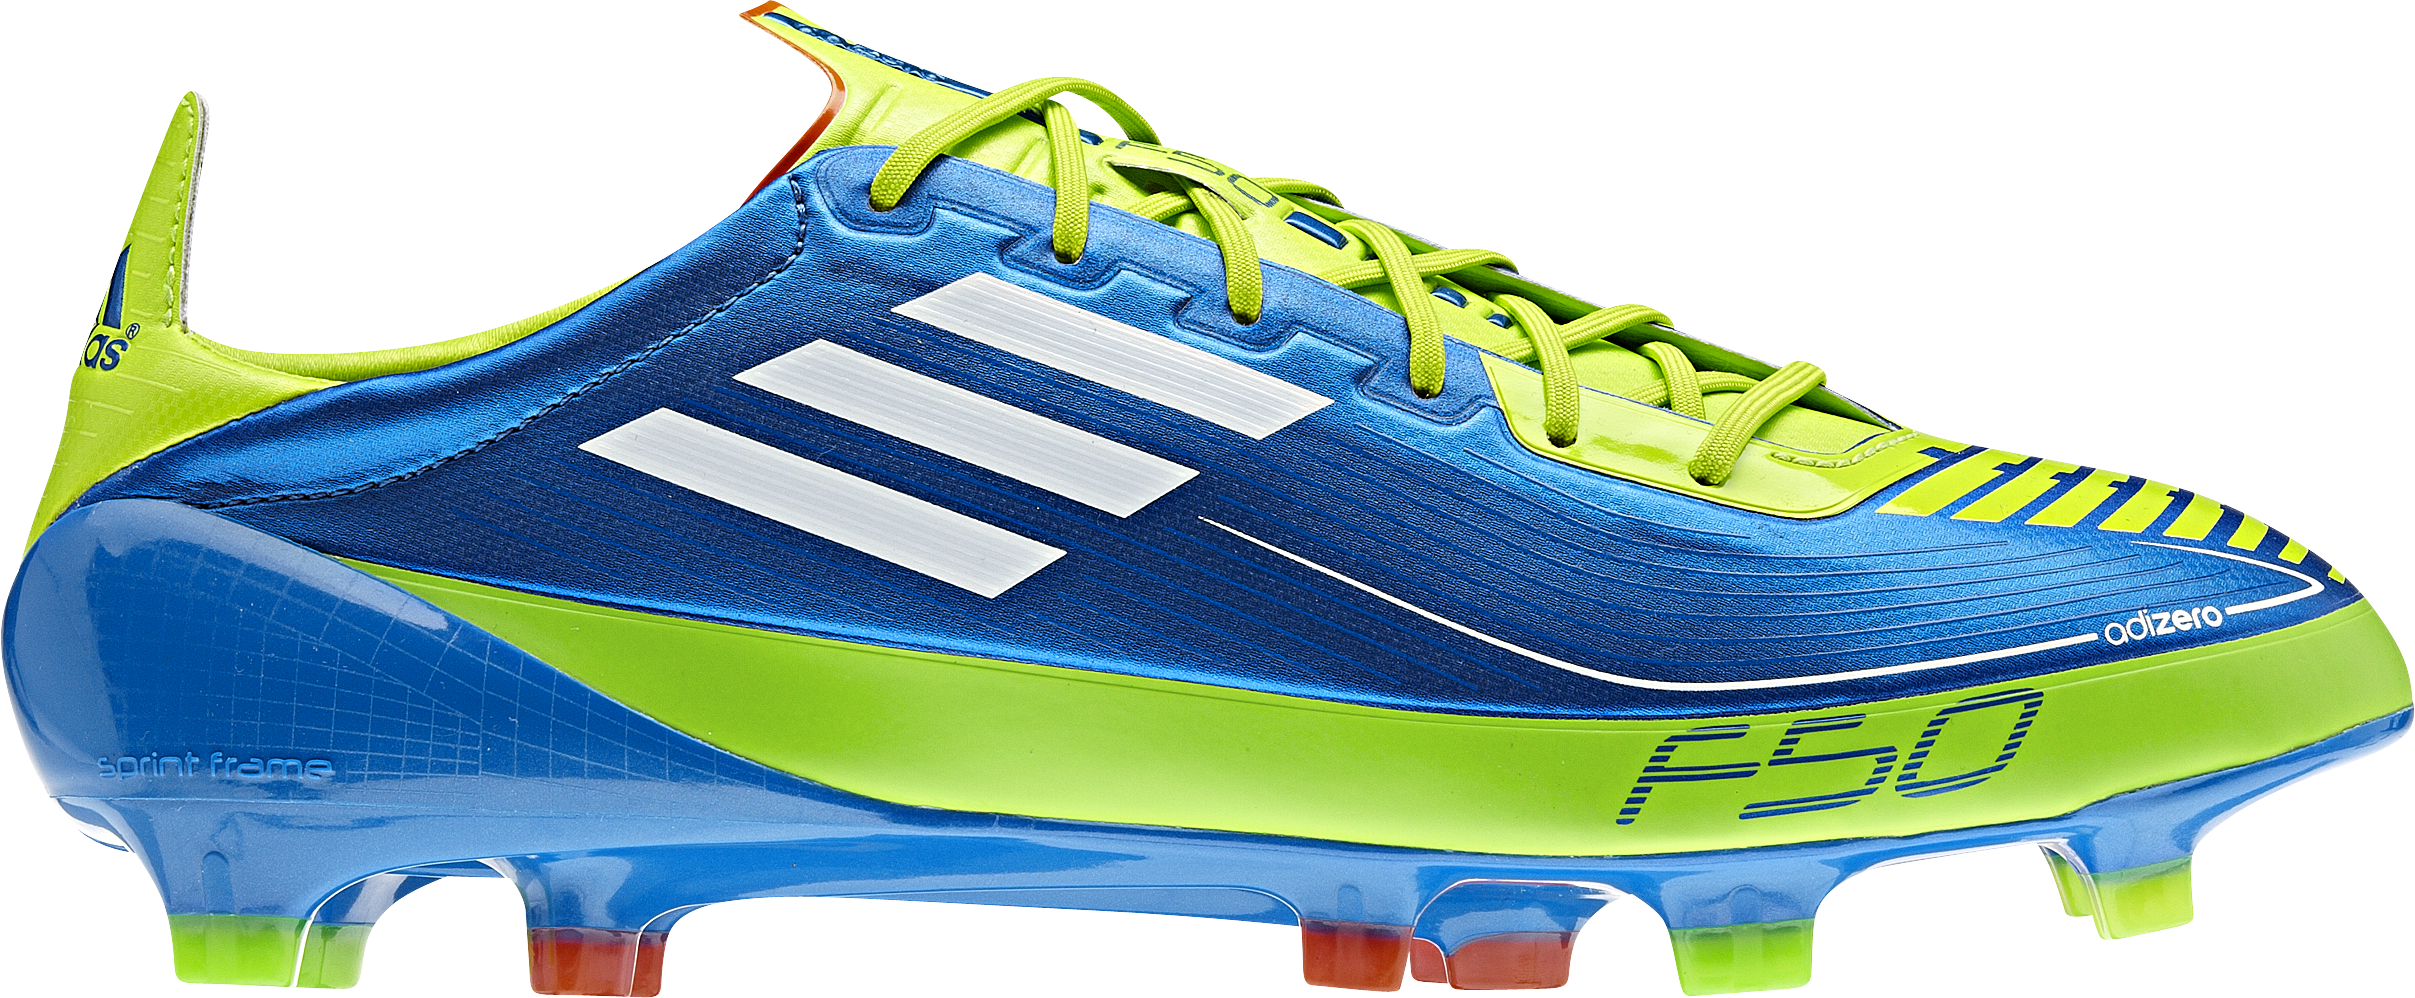 New Adidas Football Boots F50